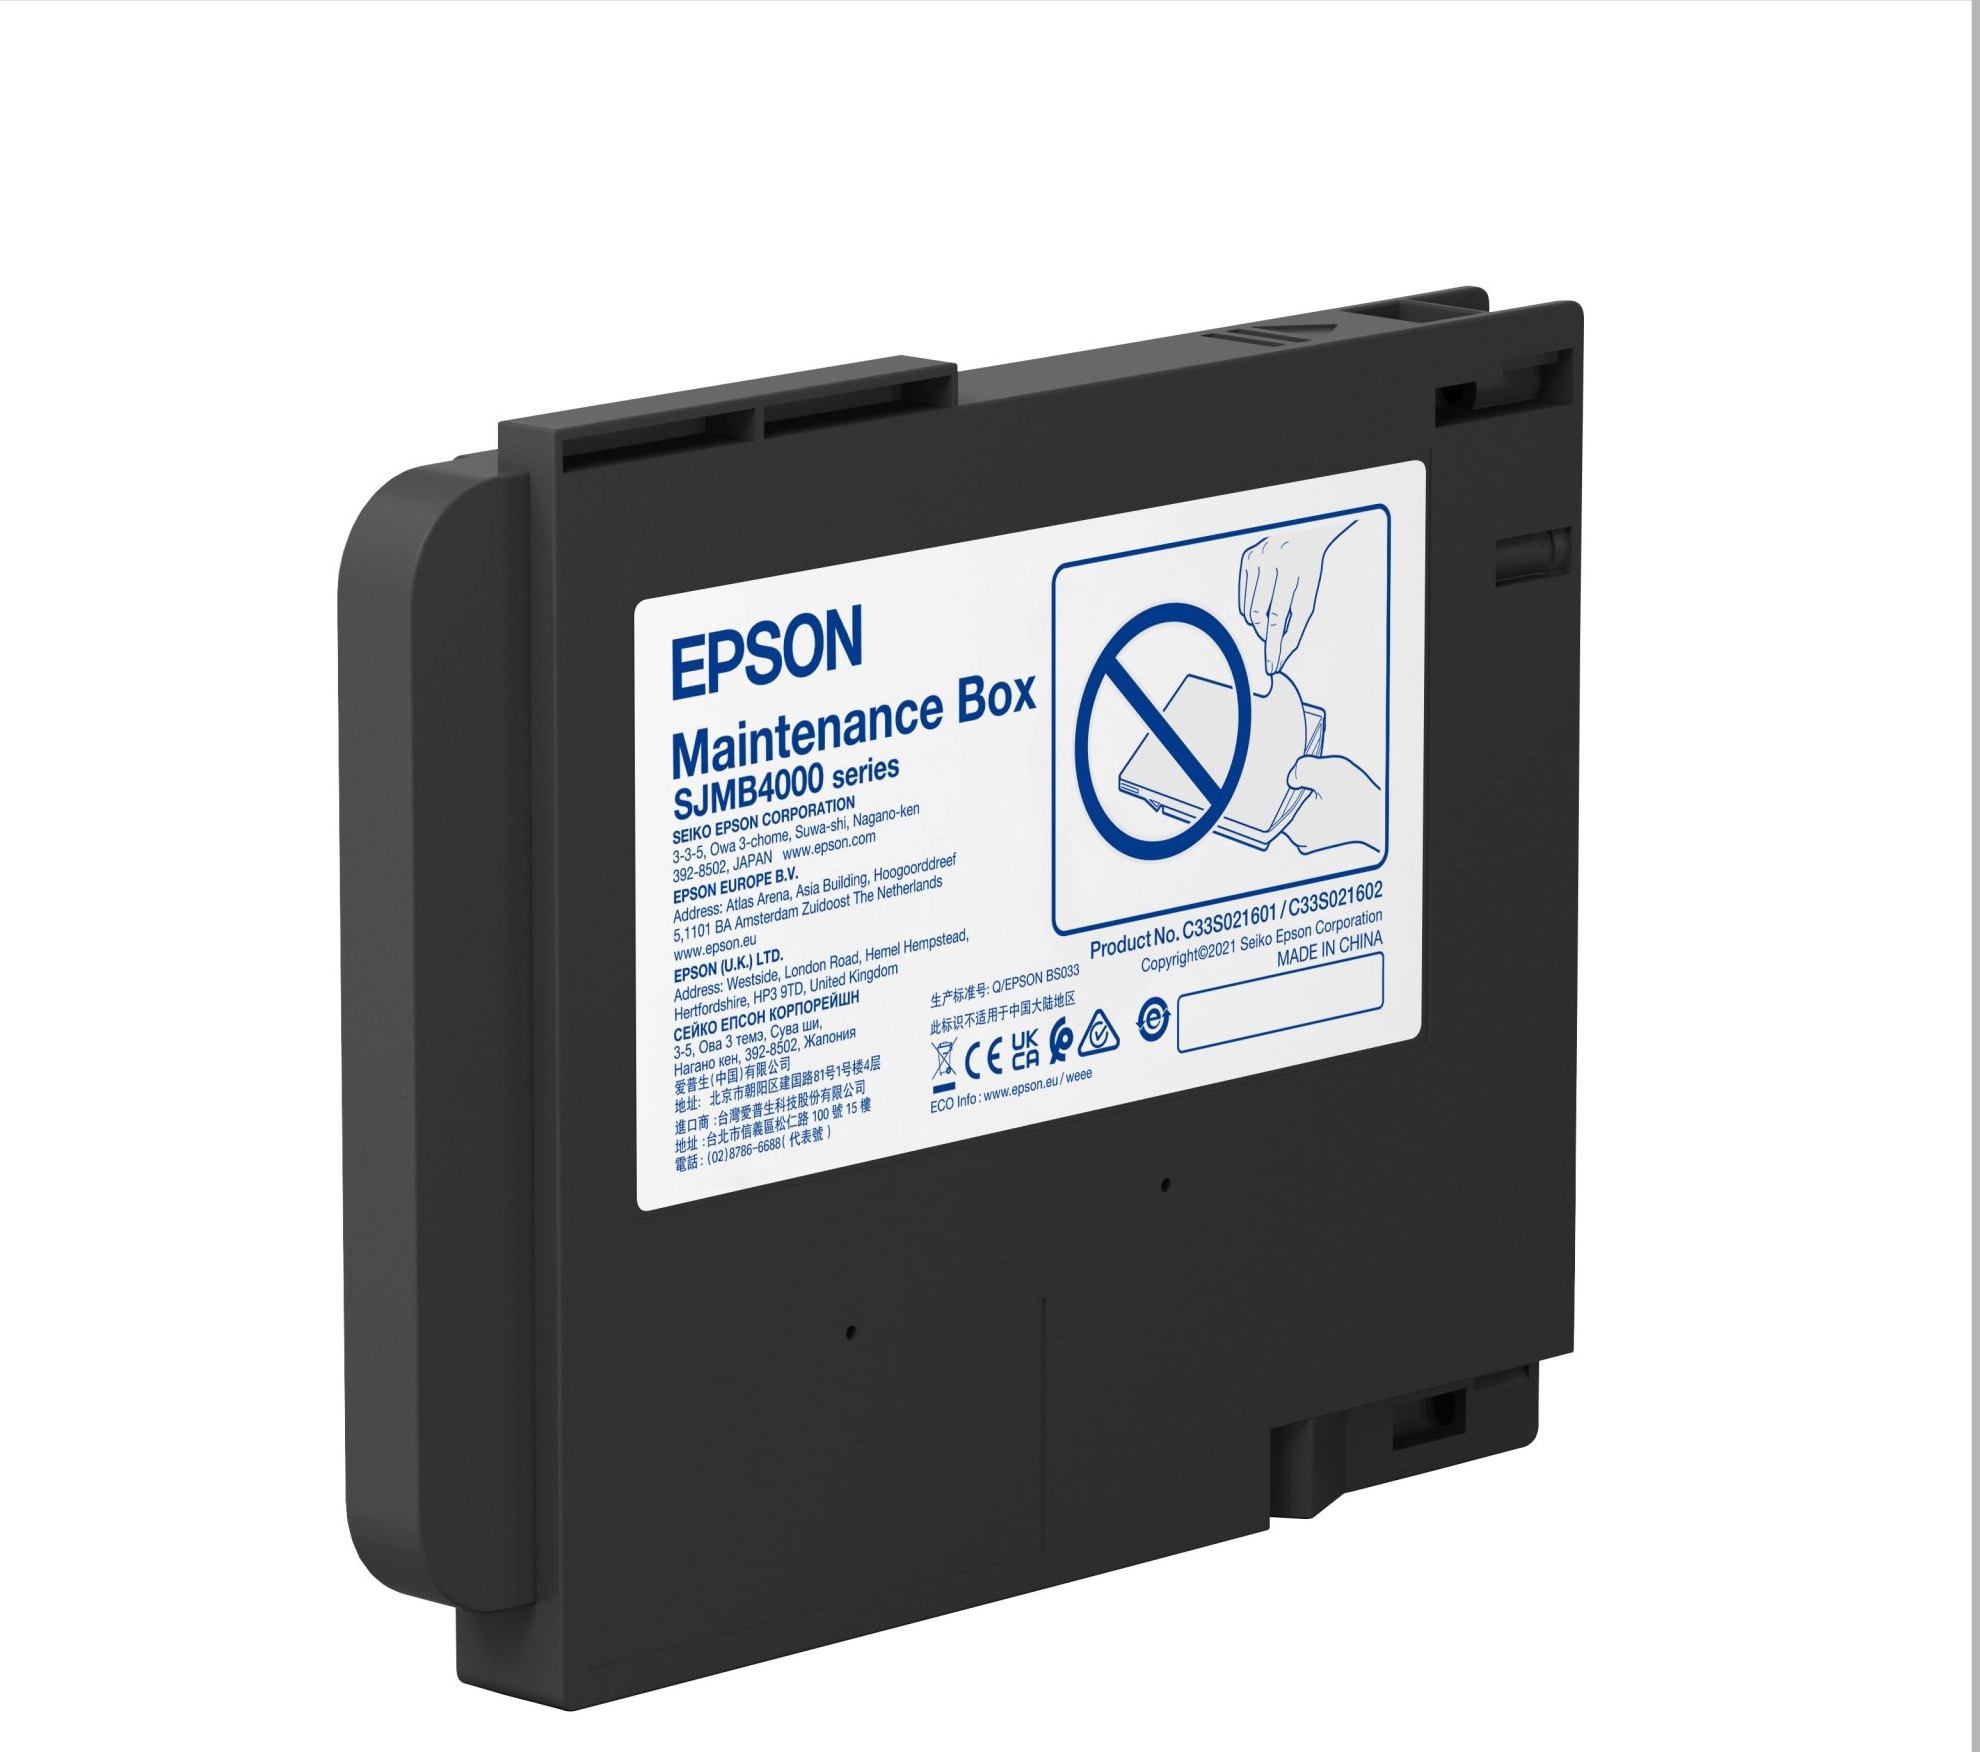 Epson ColorWorks C4000e Atk Kutusu (Maintenance box)